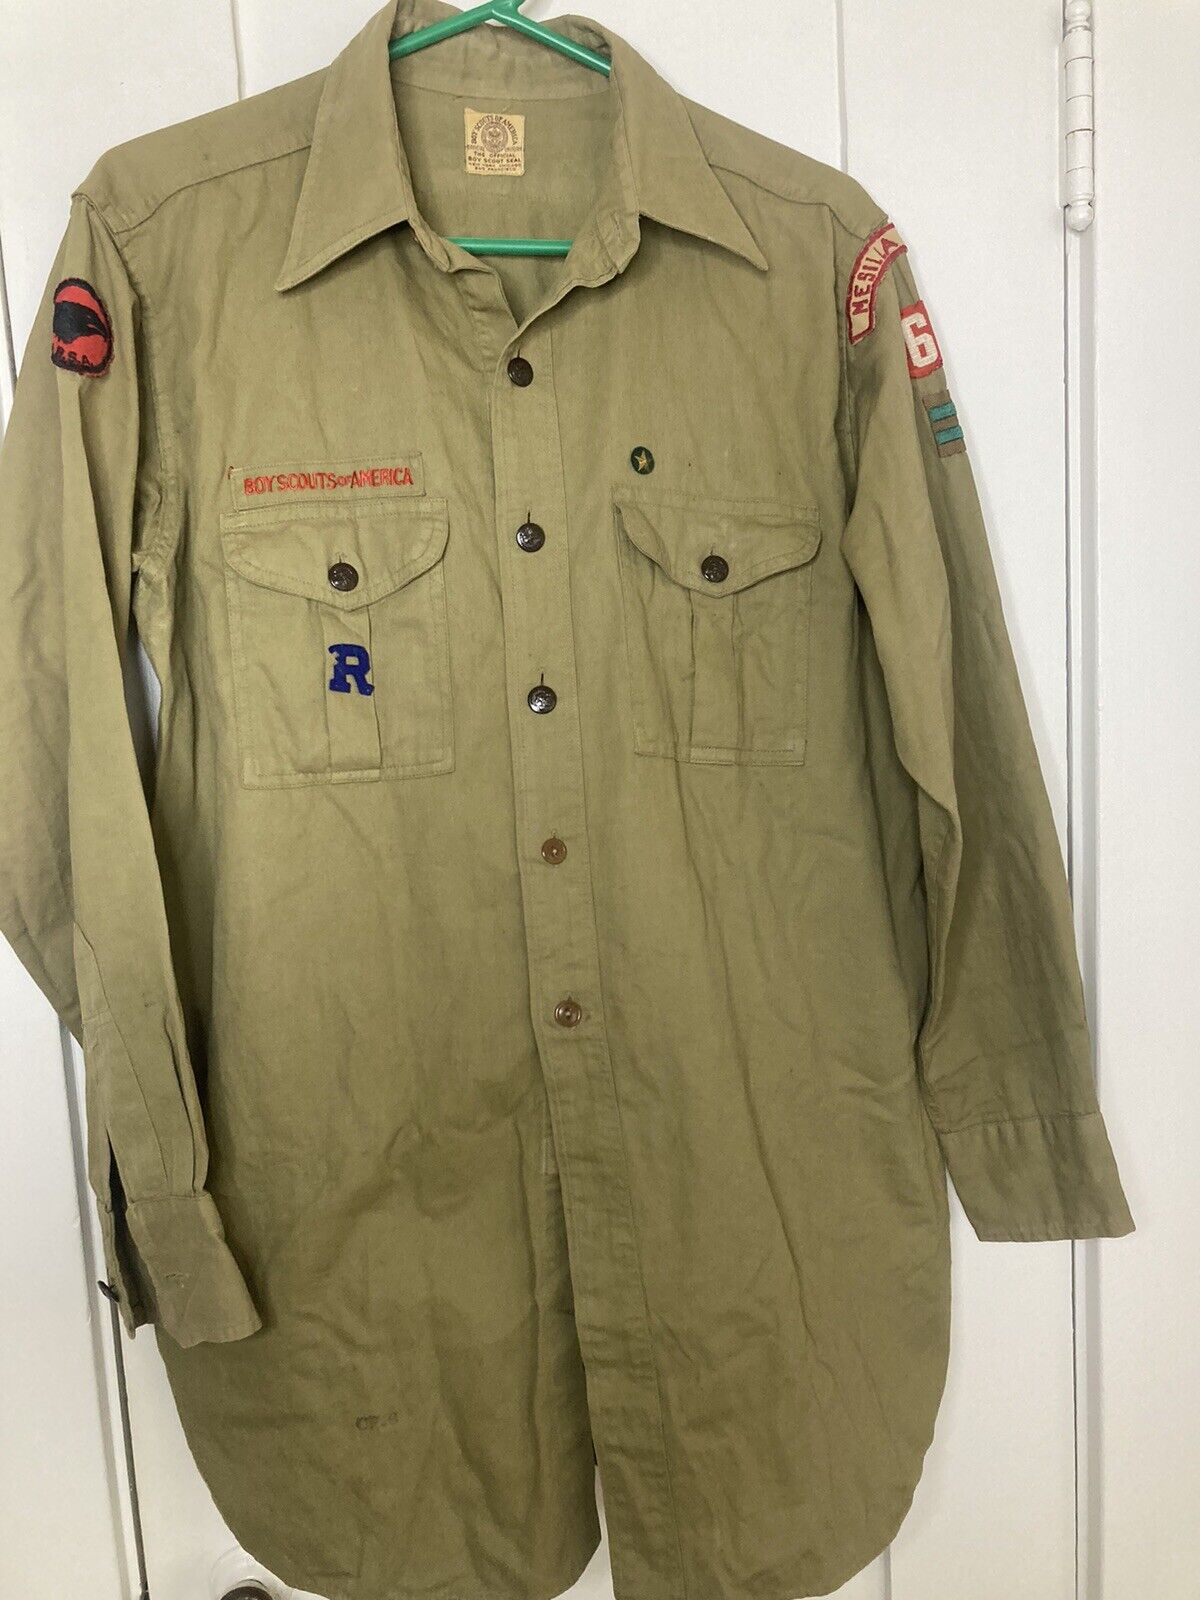 Vintage 1940’s Boy Scouts of America Official Uniform Shirt Adult Medium 